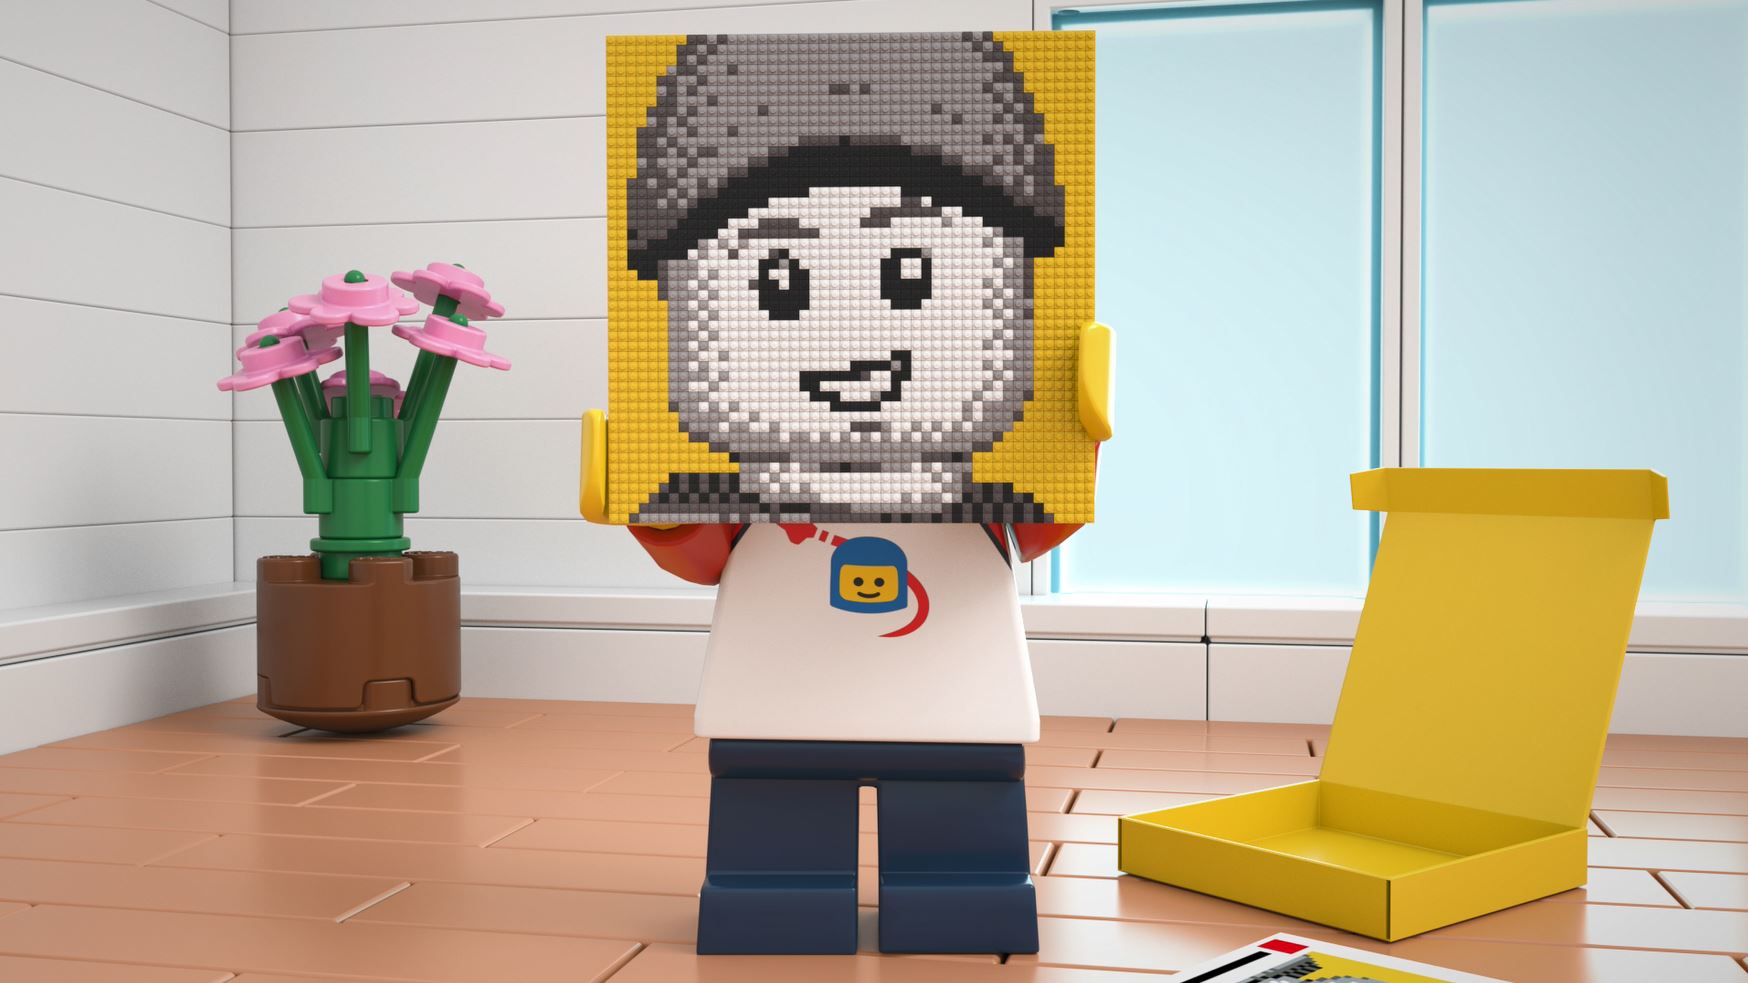 LEGO Mosaic Maker at LEGOLAND Windsor Resort